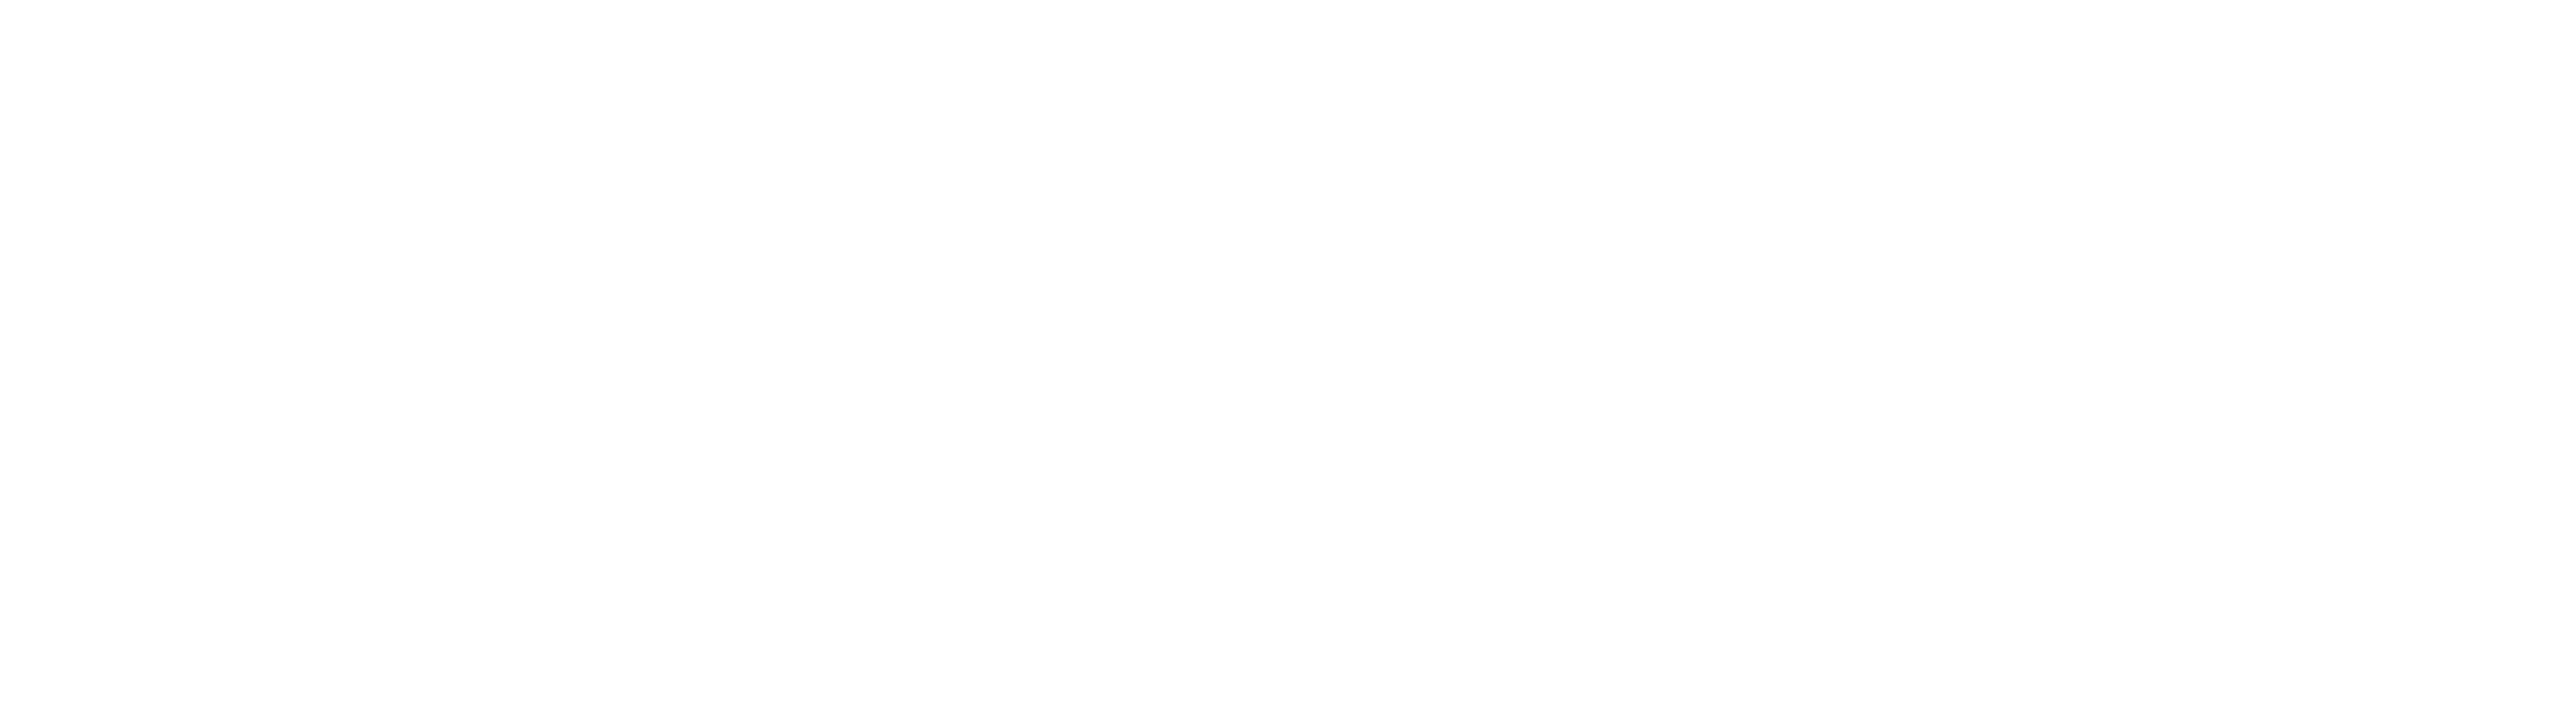 TrustQuay logo White